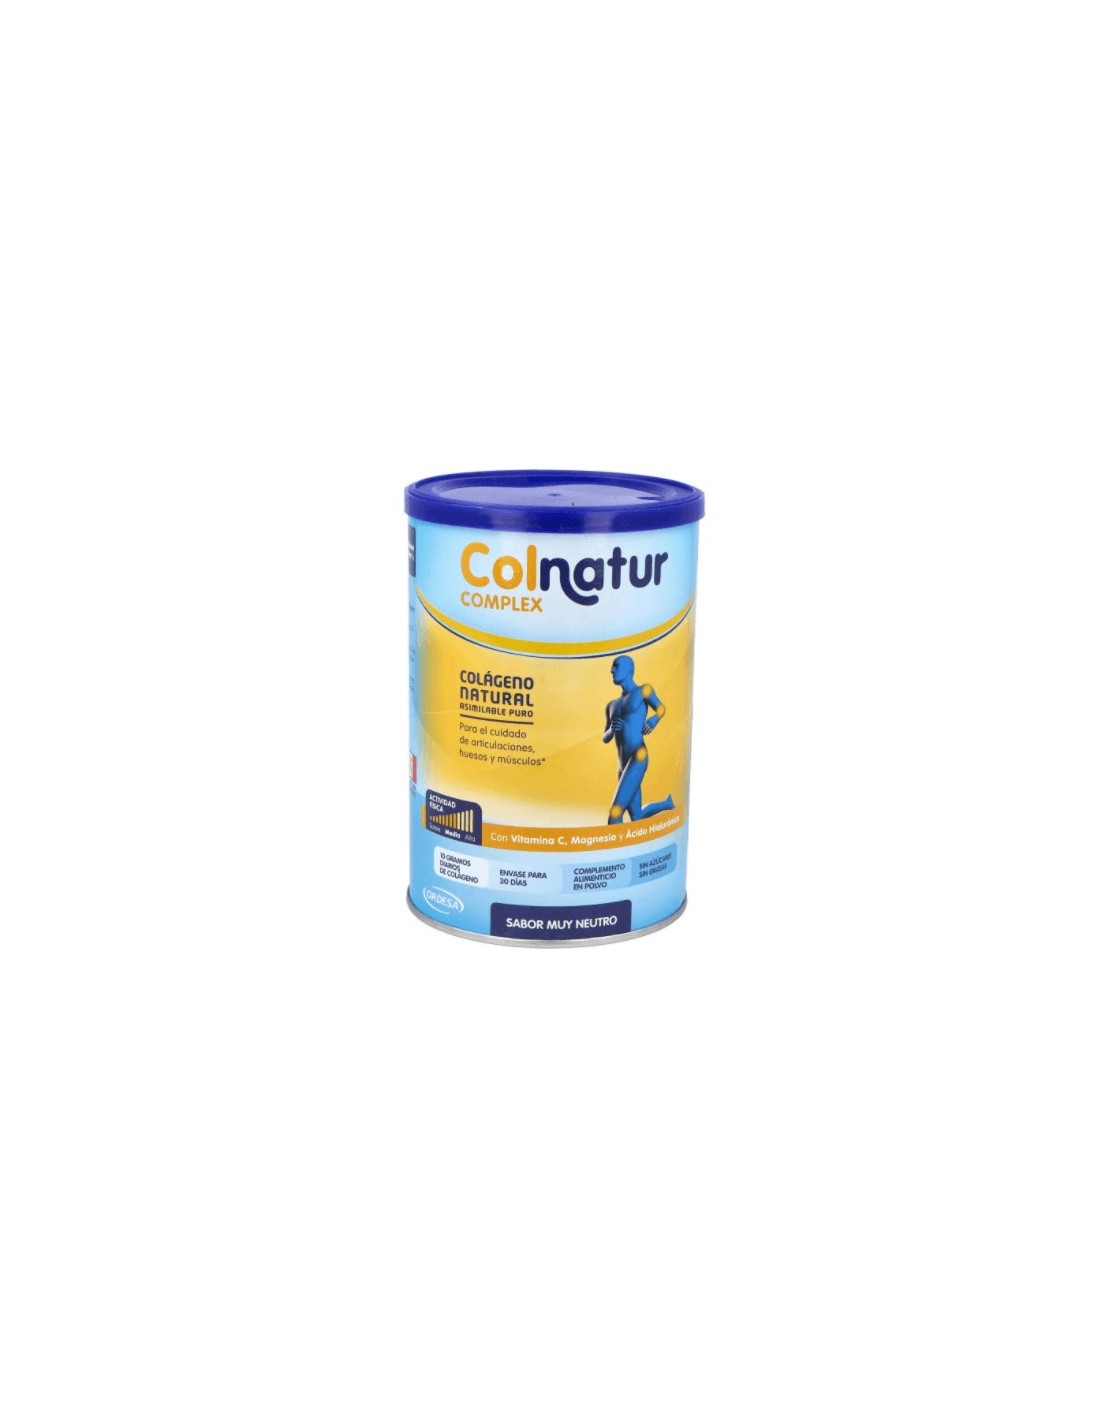 Colnatur complex 1 envase 330 g sabor neutro + regalo promocional (toalla)